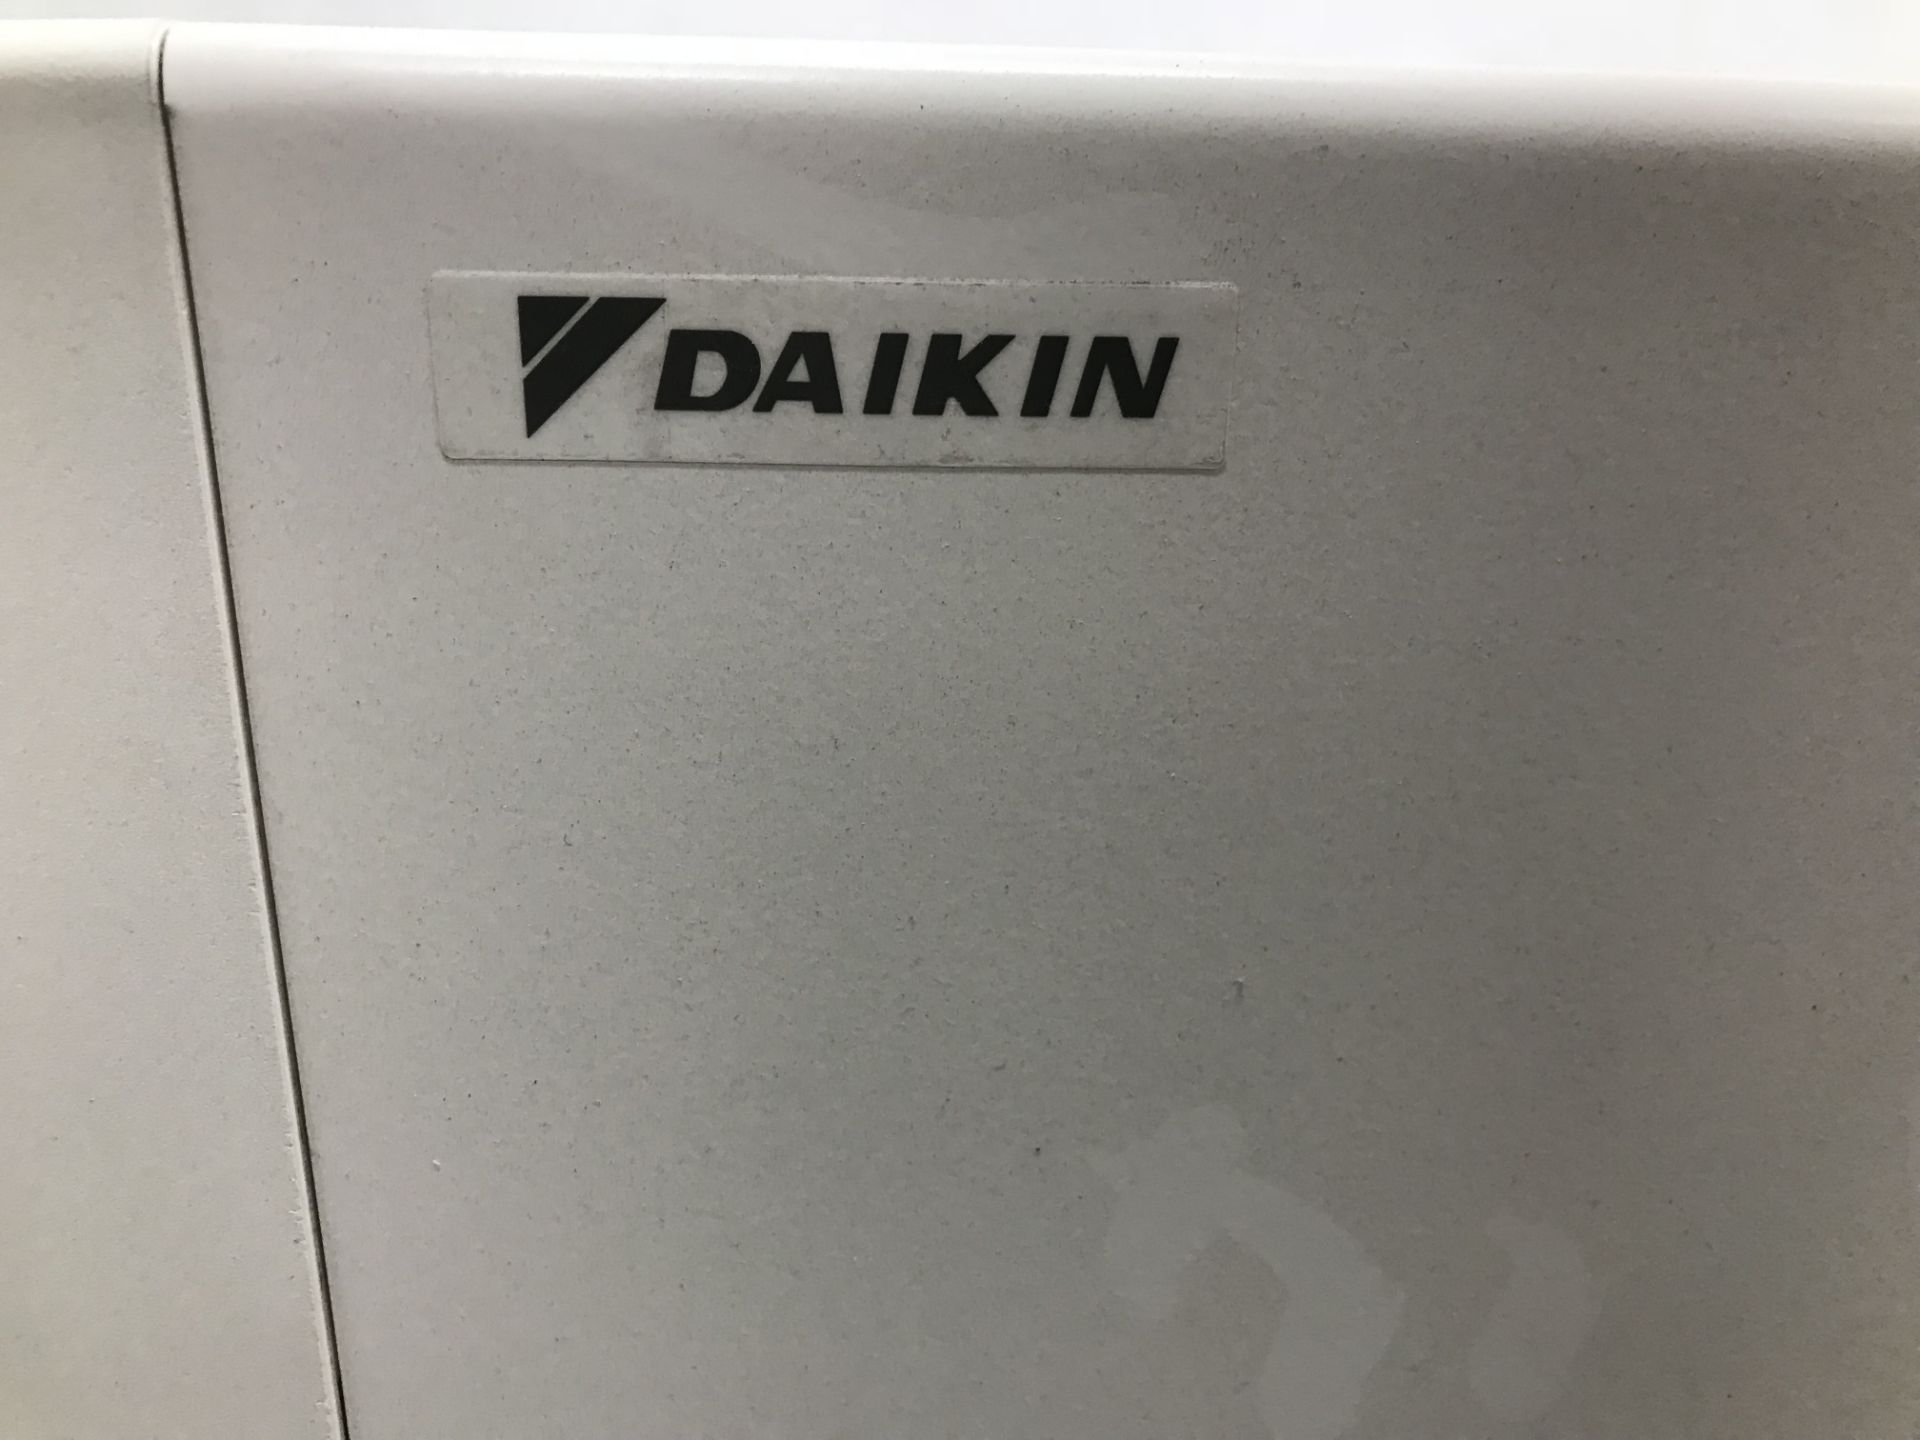 Daikin FXLQ20P2VEB VRV System Air Conditioning Unit - Image 3 of 6